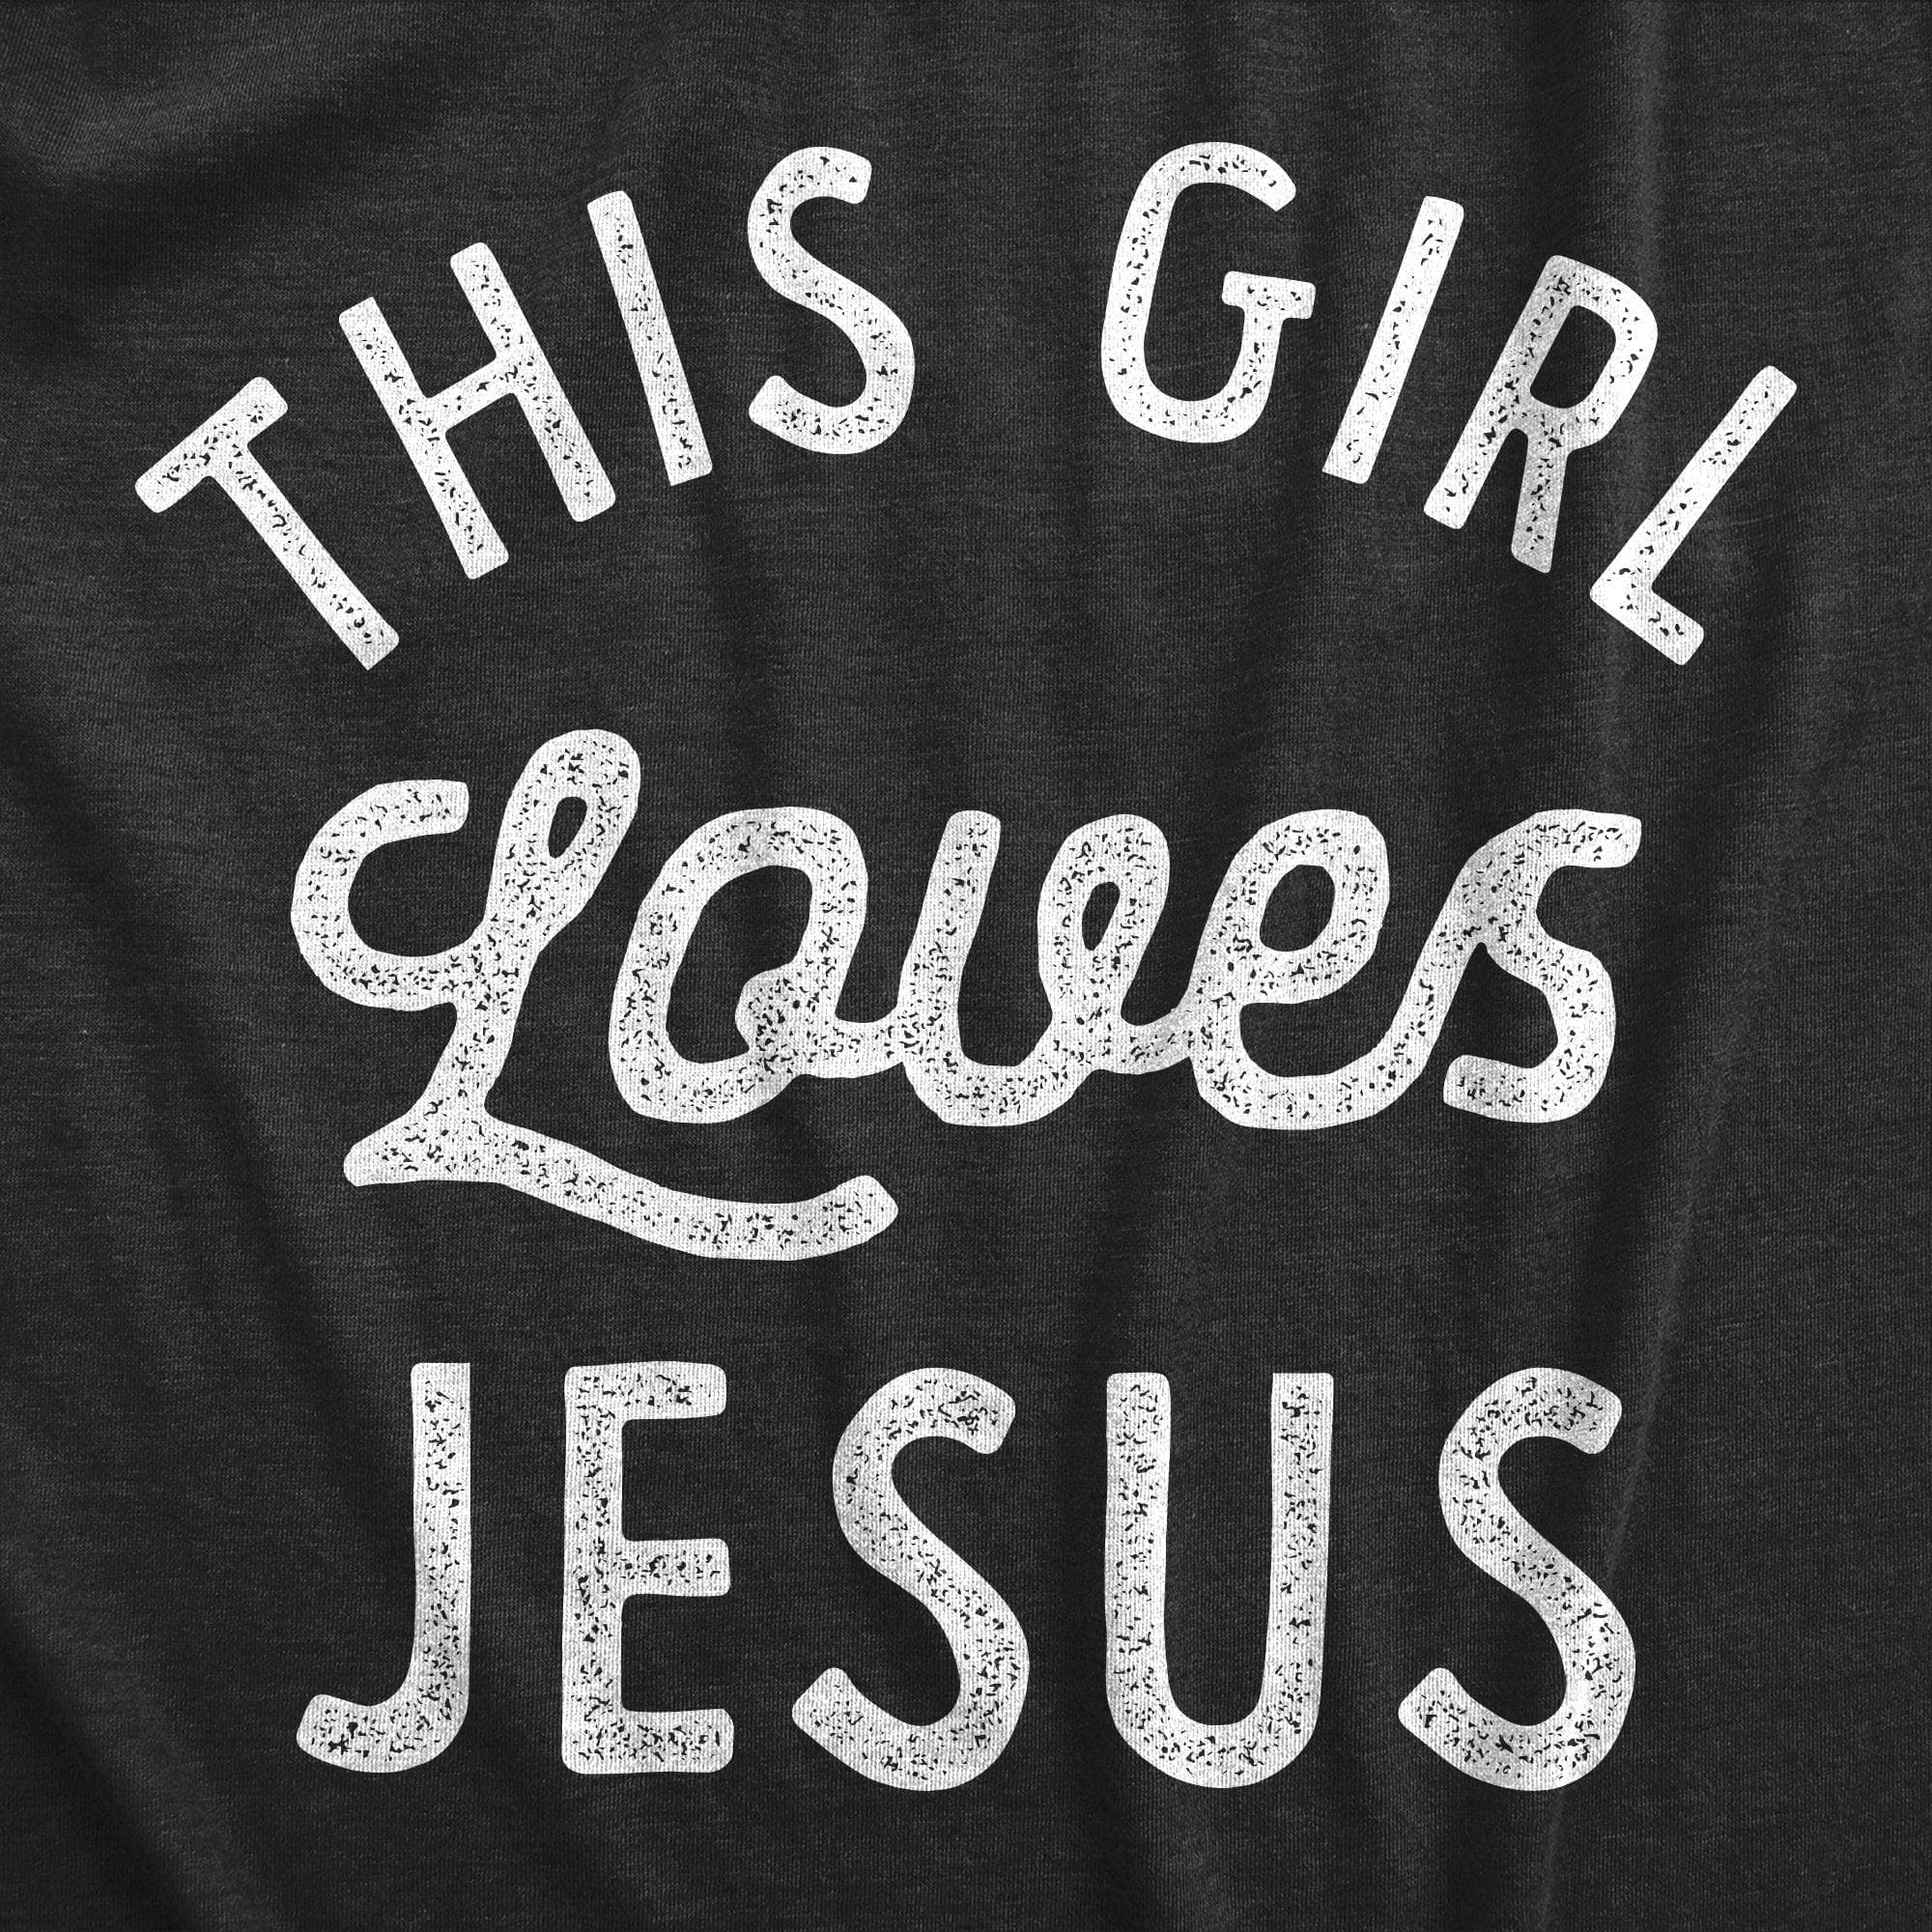 This Girl Loves Jesus Women's Tshirt  -  Crazy Dog T-Shirts